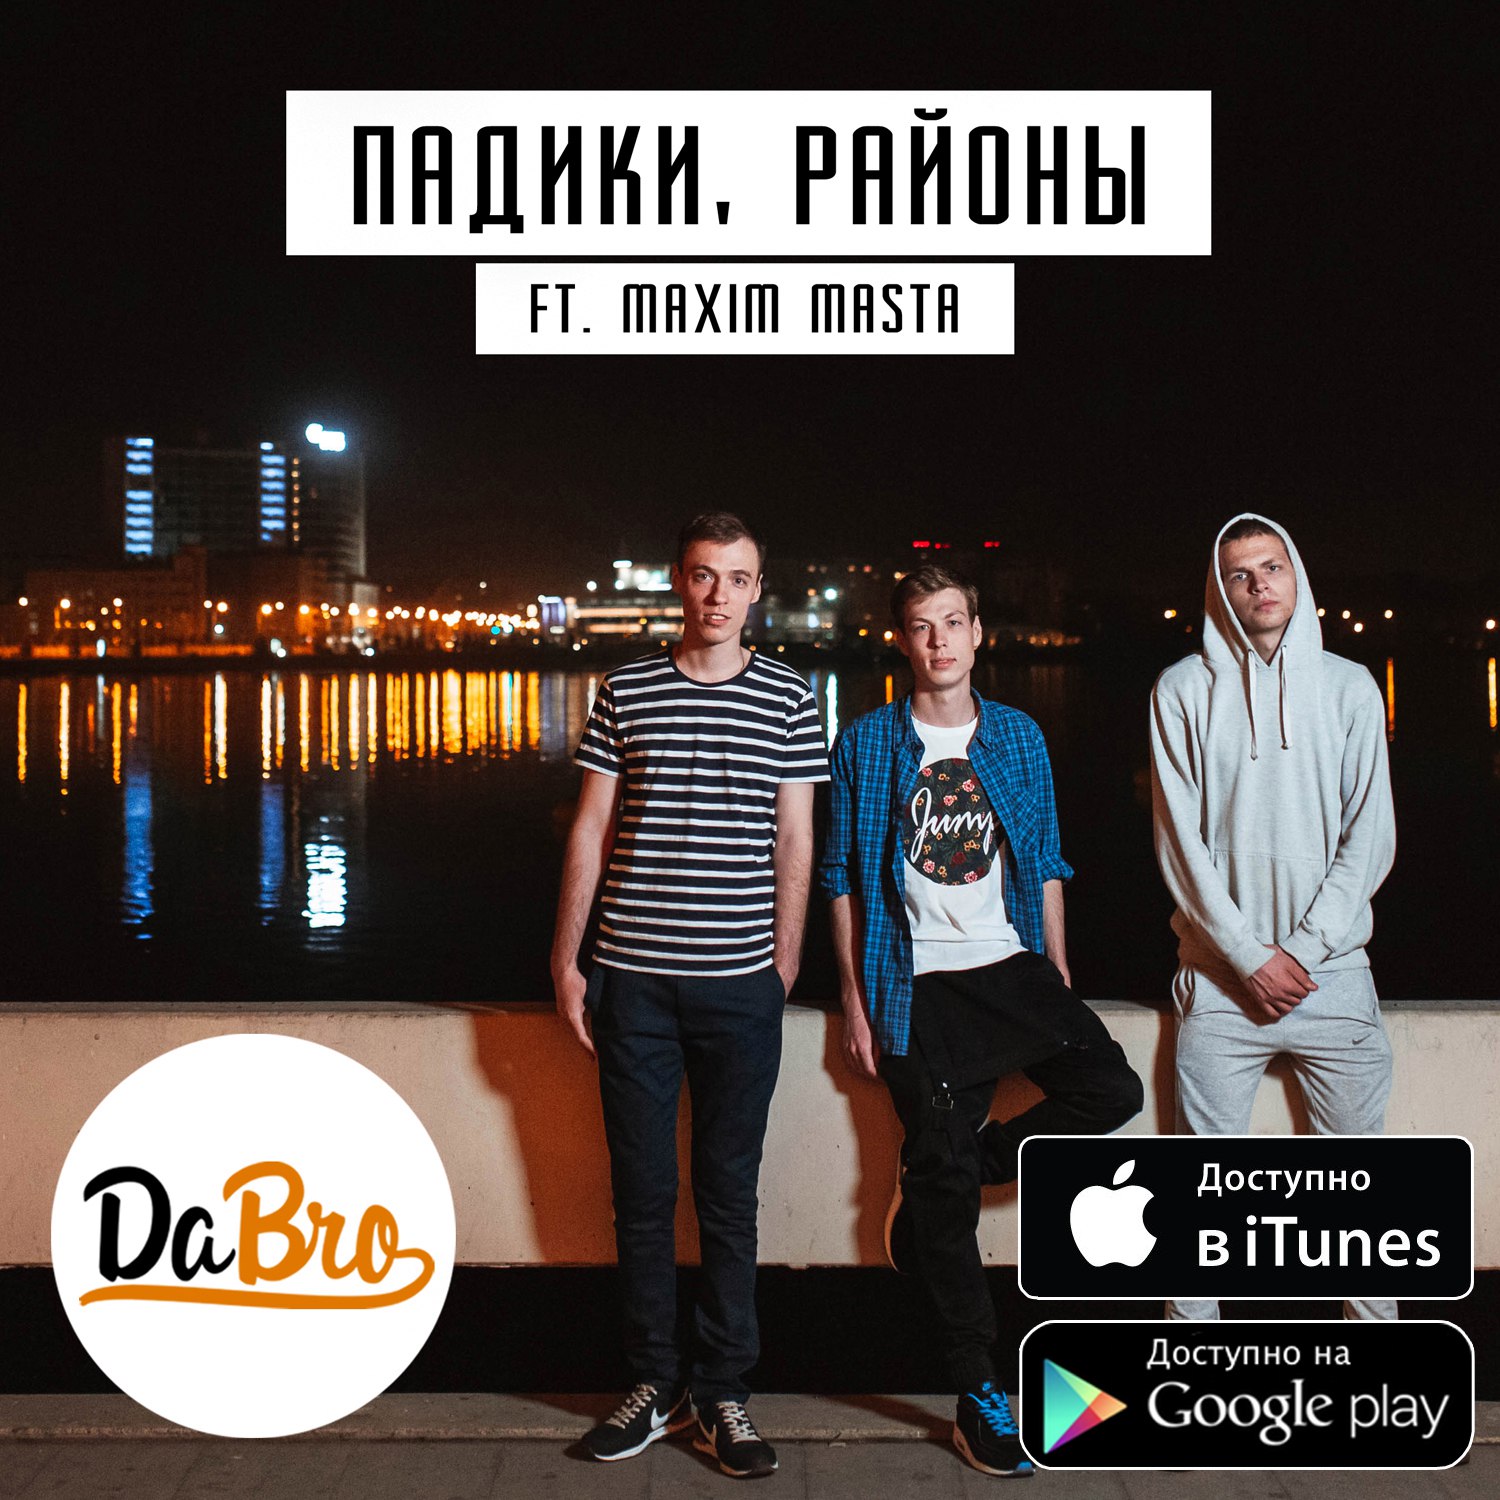 Dabro Падики, Районы Bass by Dragun